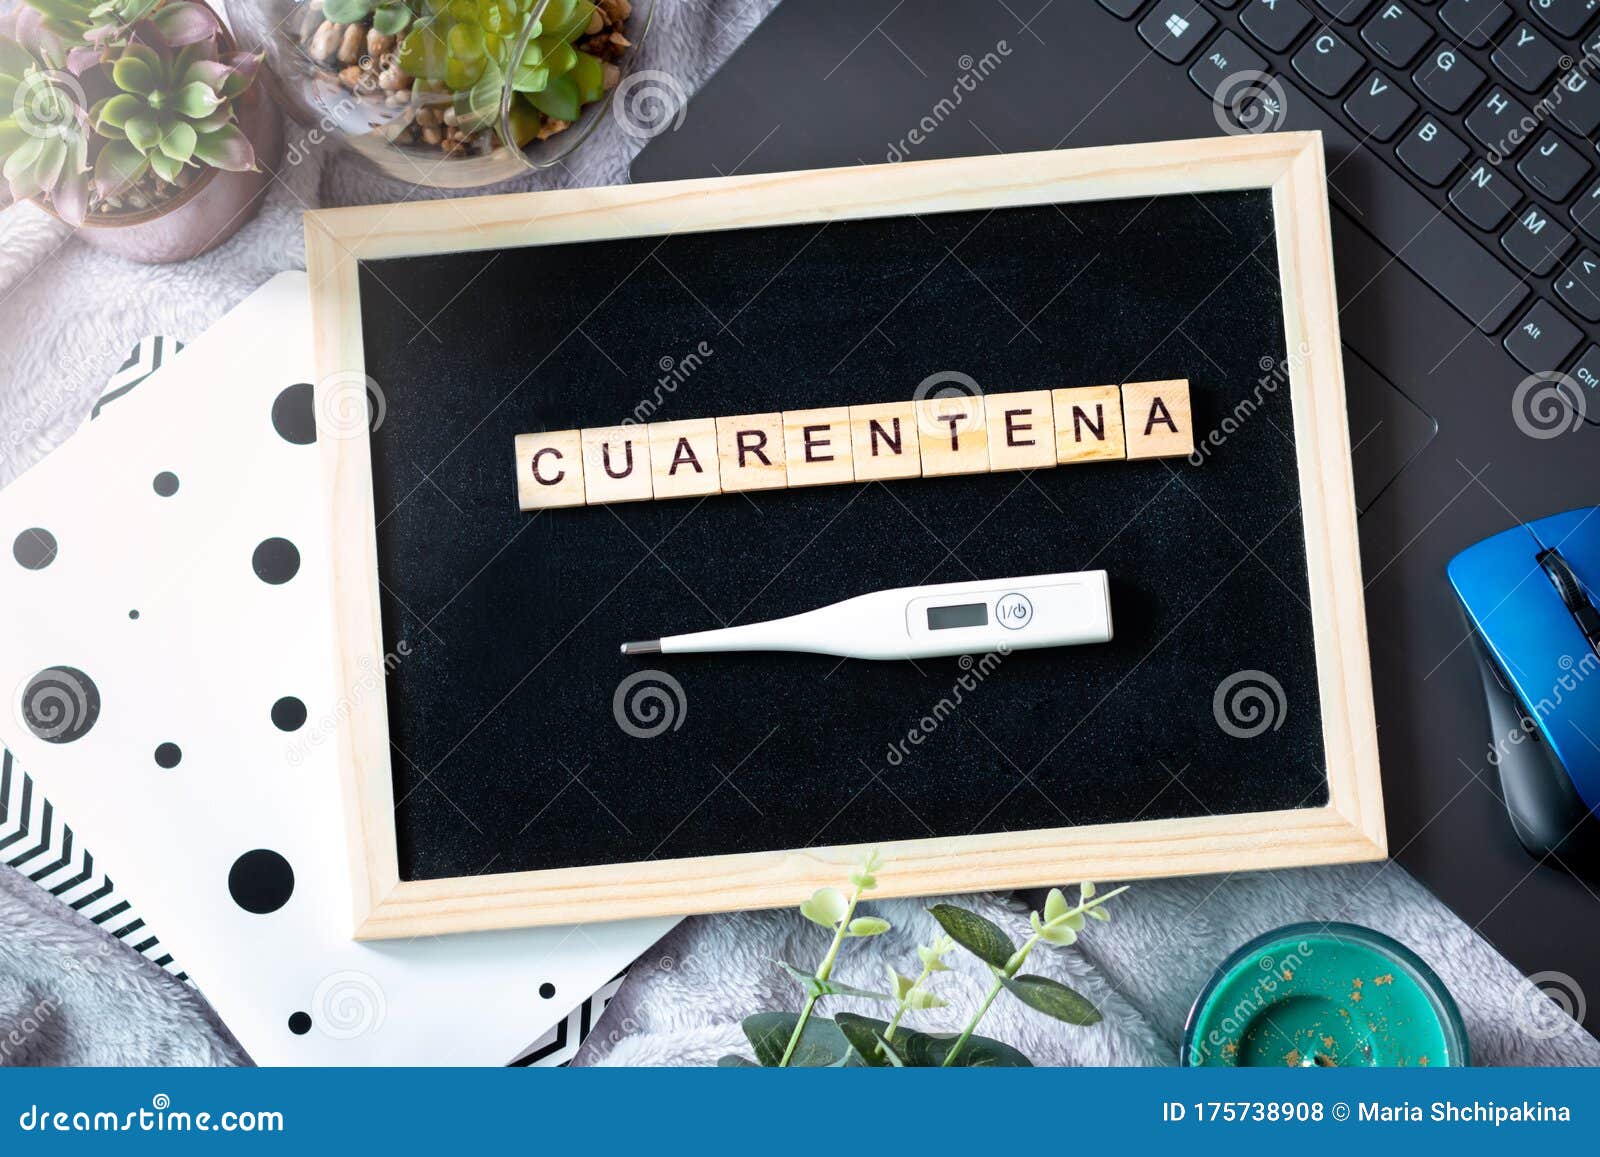 spanish word cuarentena made of wooden blocks, concept of self quarantine at home as preventative measure against virus outbreak.